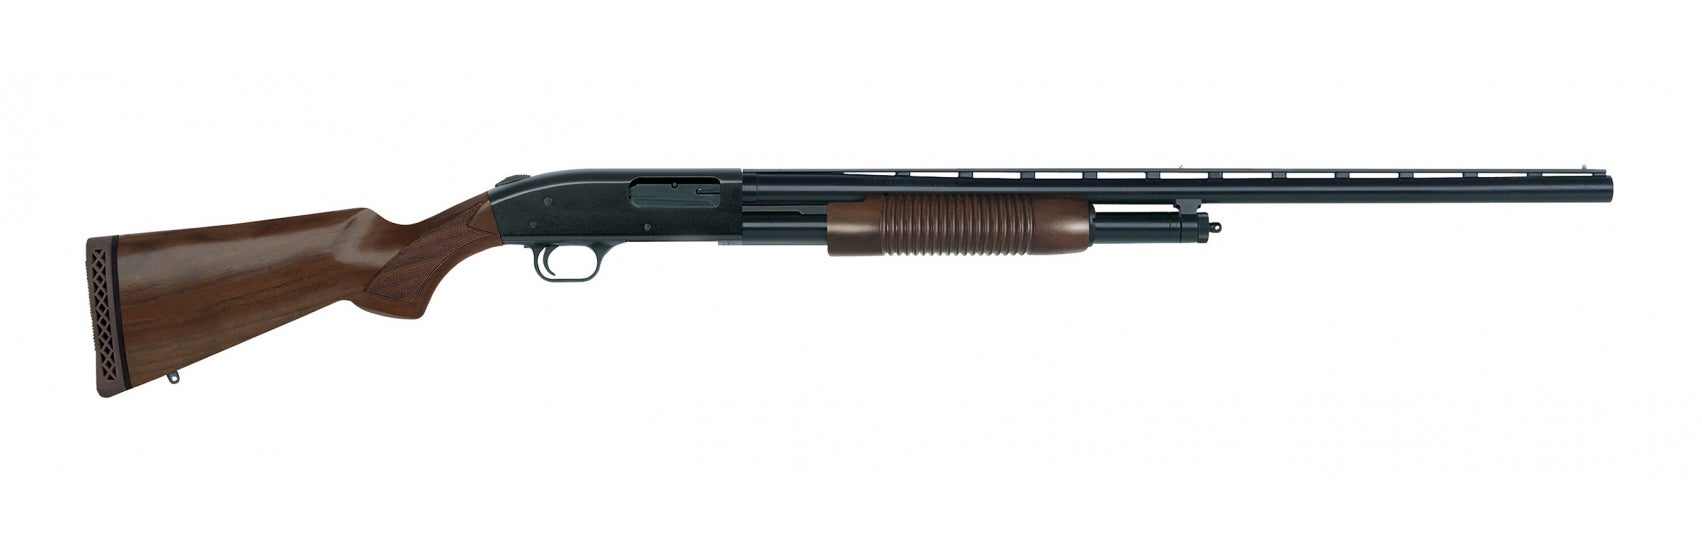 A pump-action type of shotgun. 